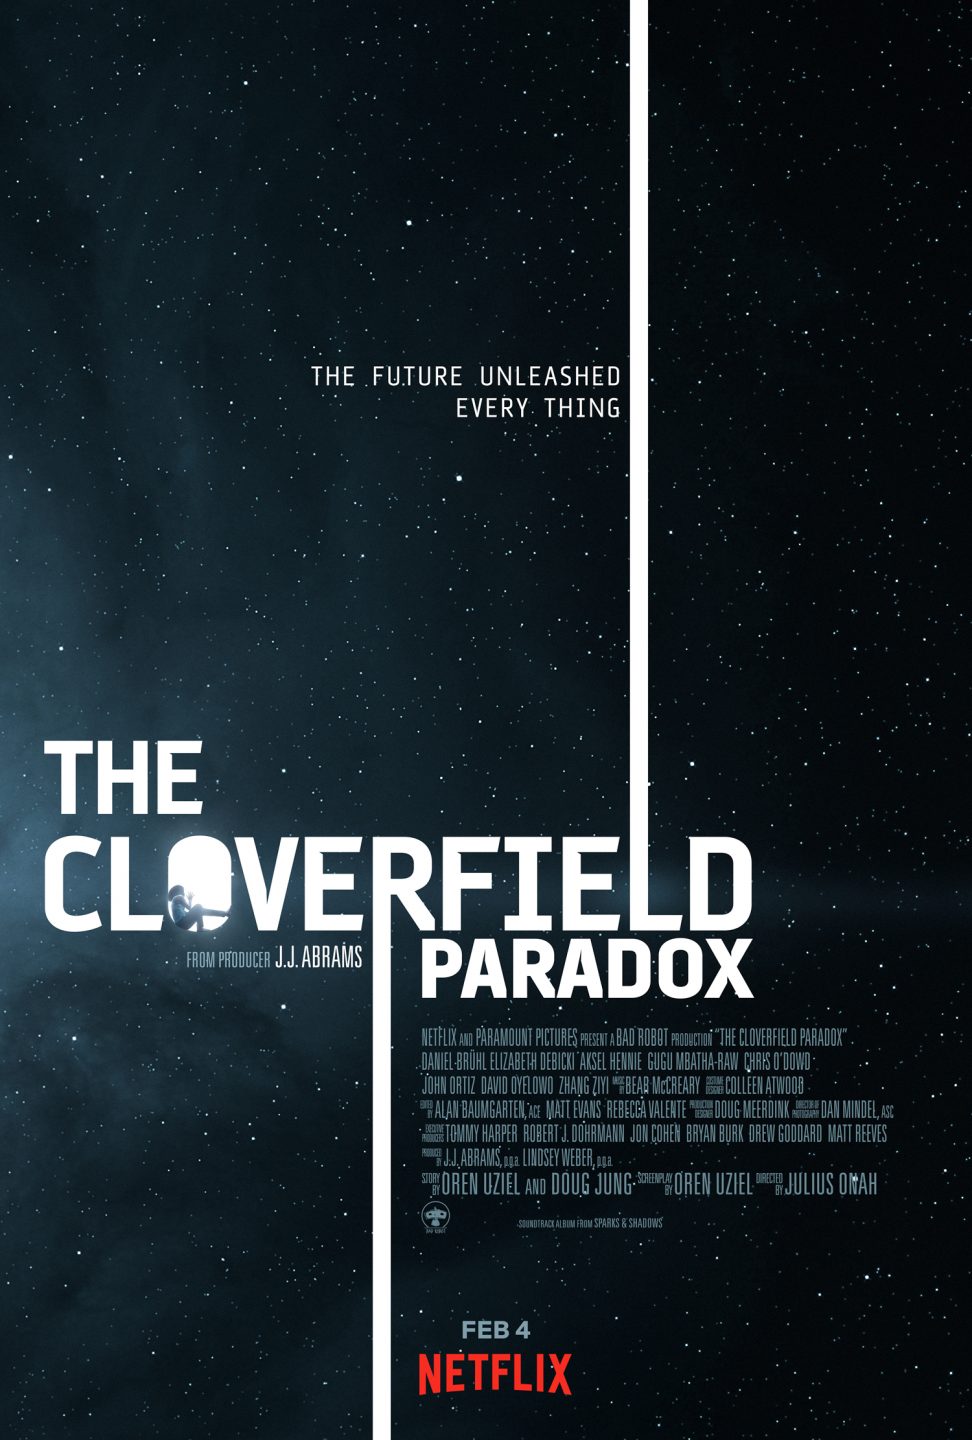 The Cloverfield Paradox poster (Netflix)